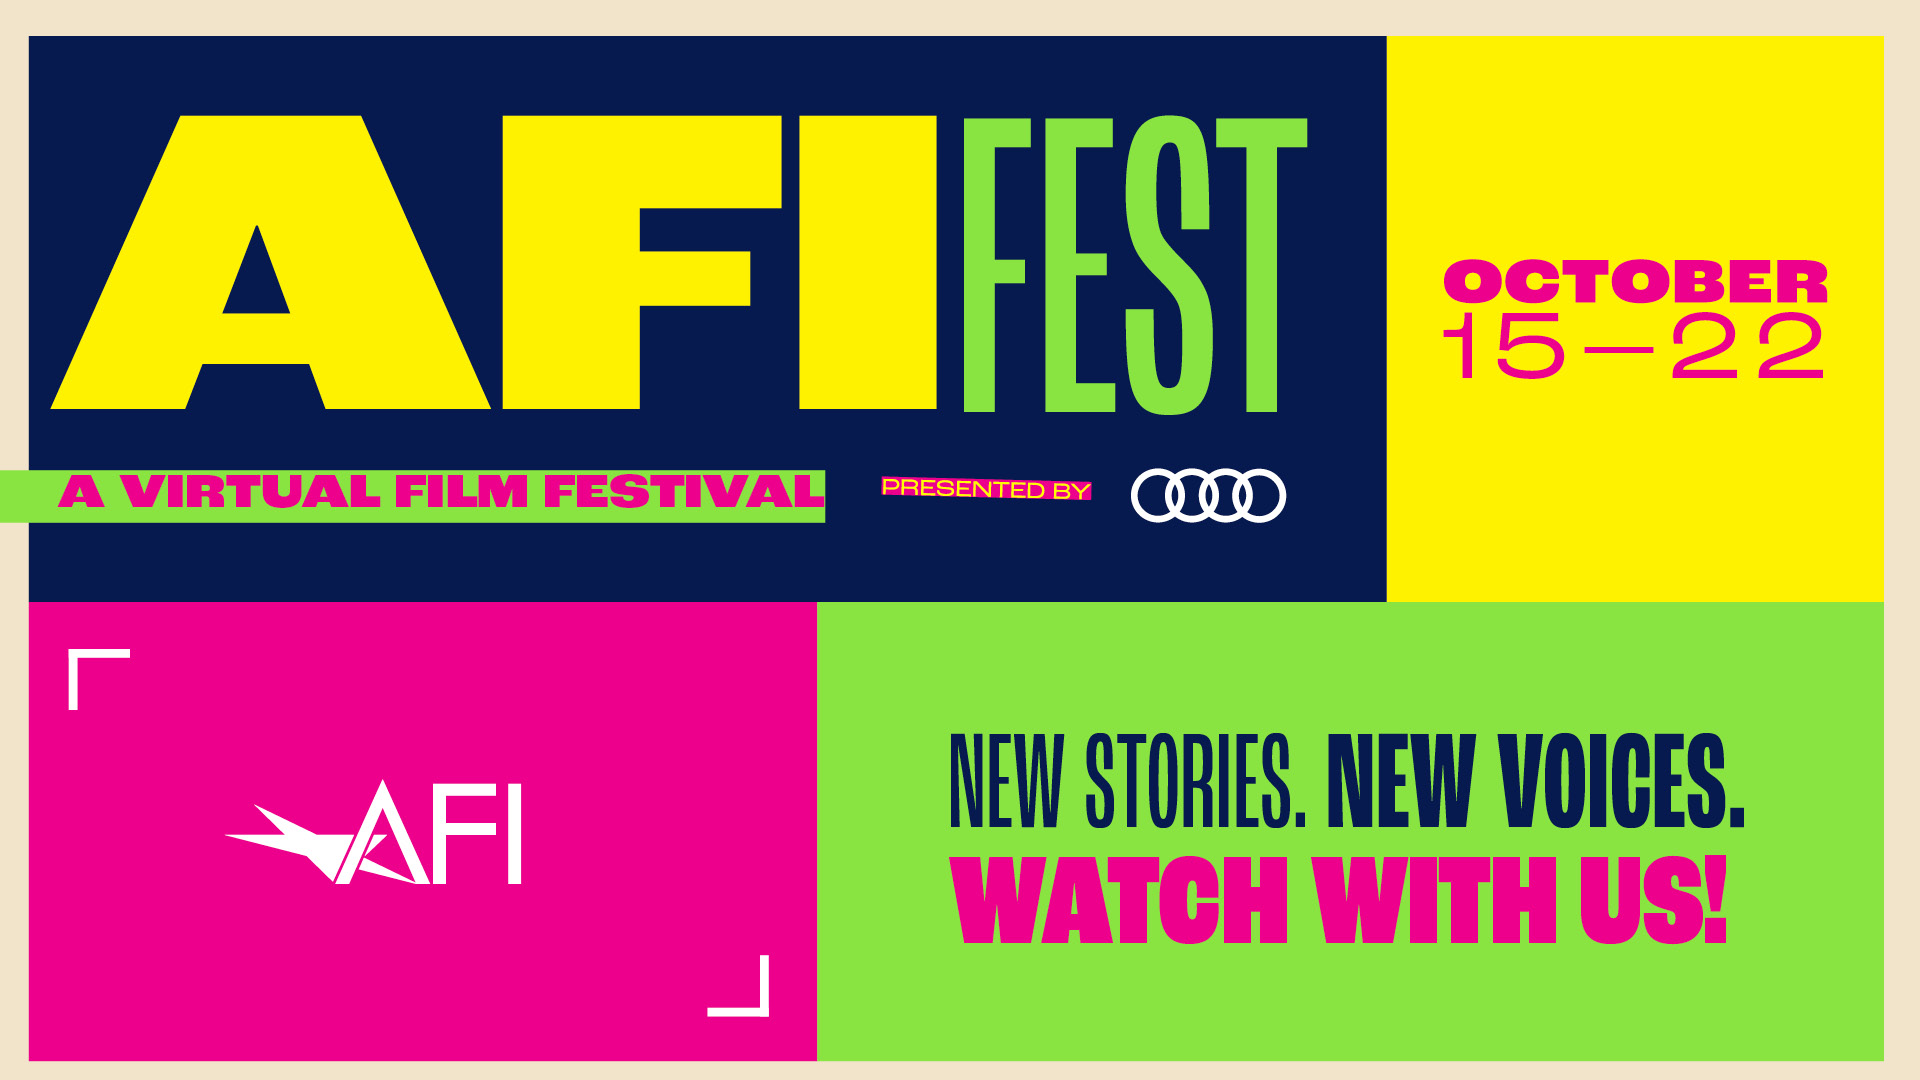 AFI FEST Goes Virtual Oct. 15-22 American Film Institute